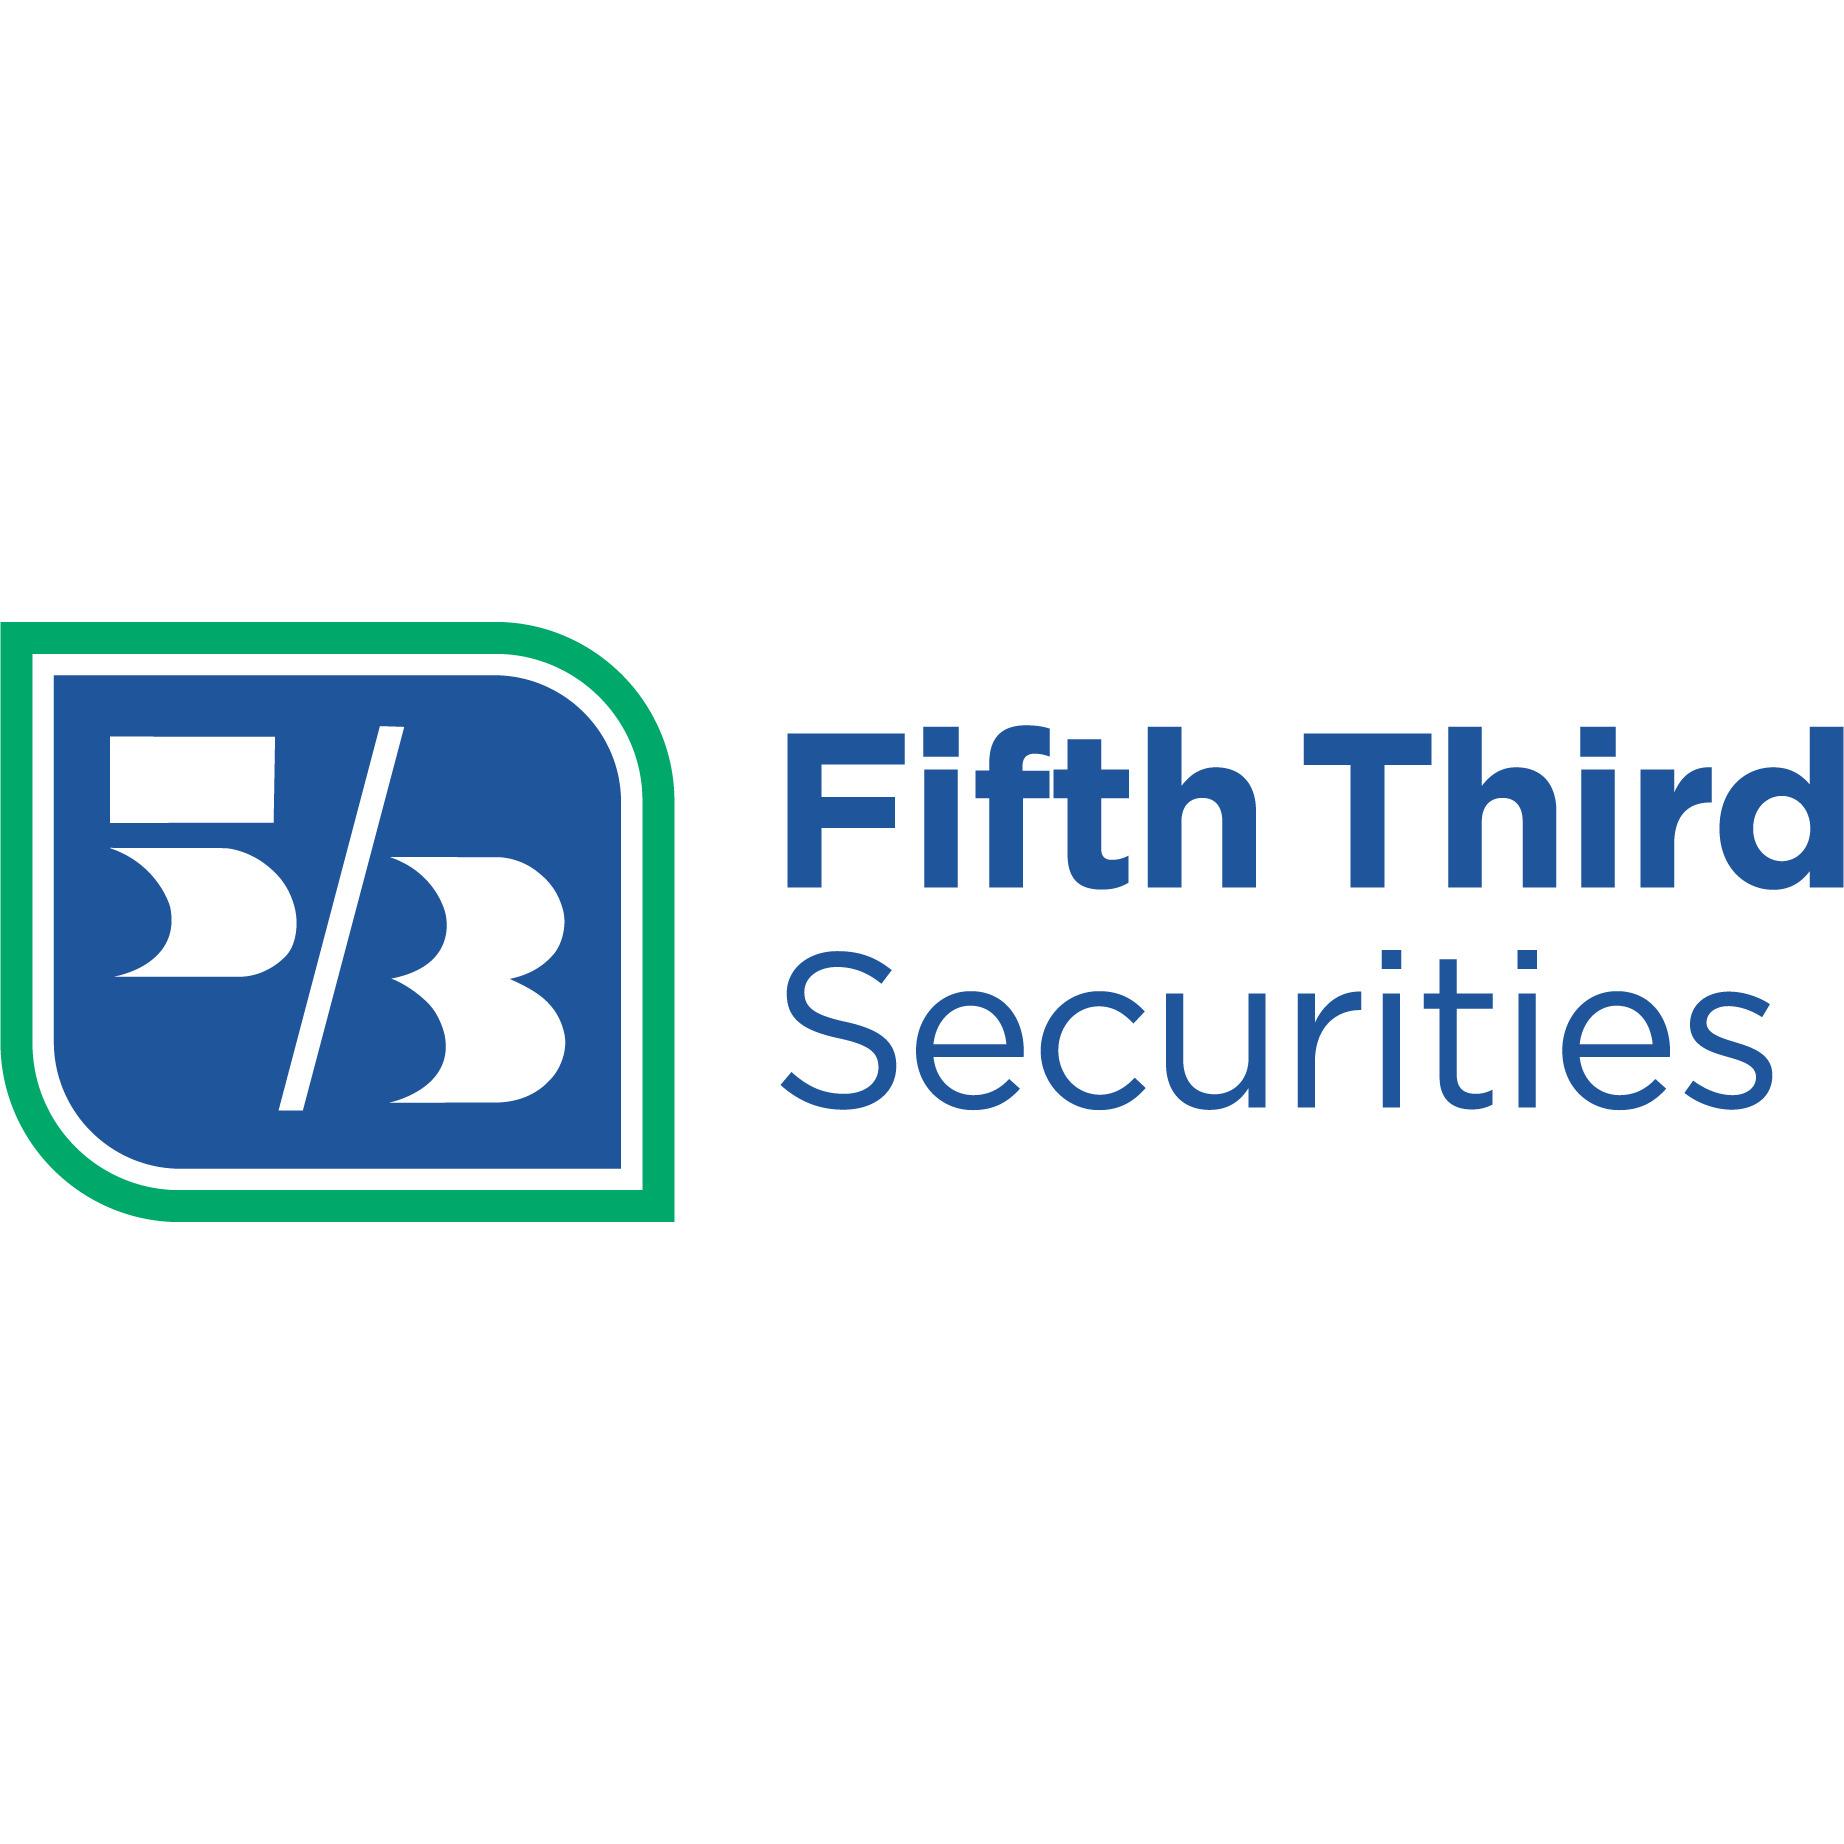 Fifth Third Securities - Jason Rizzo